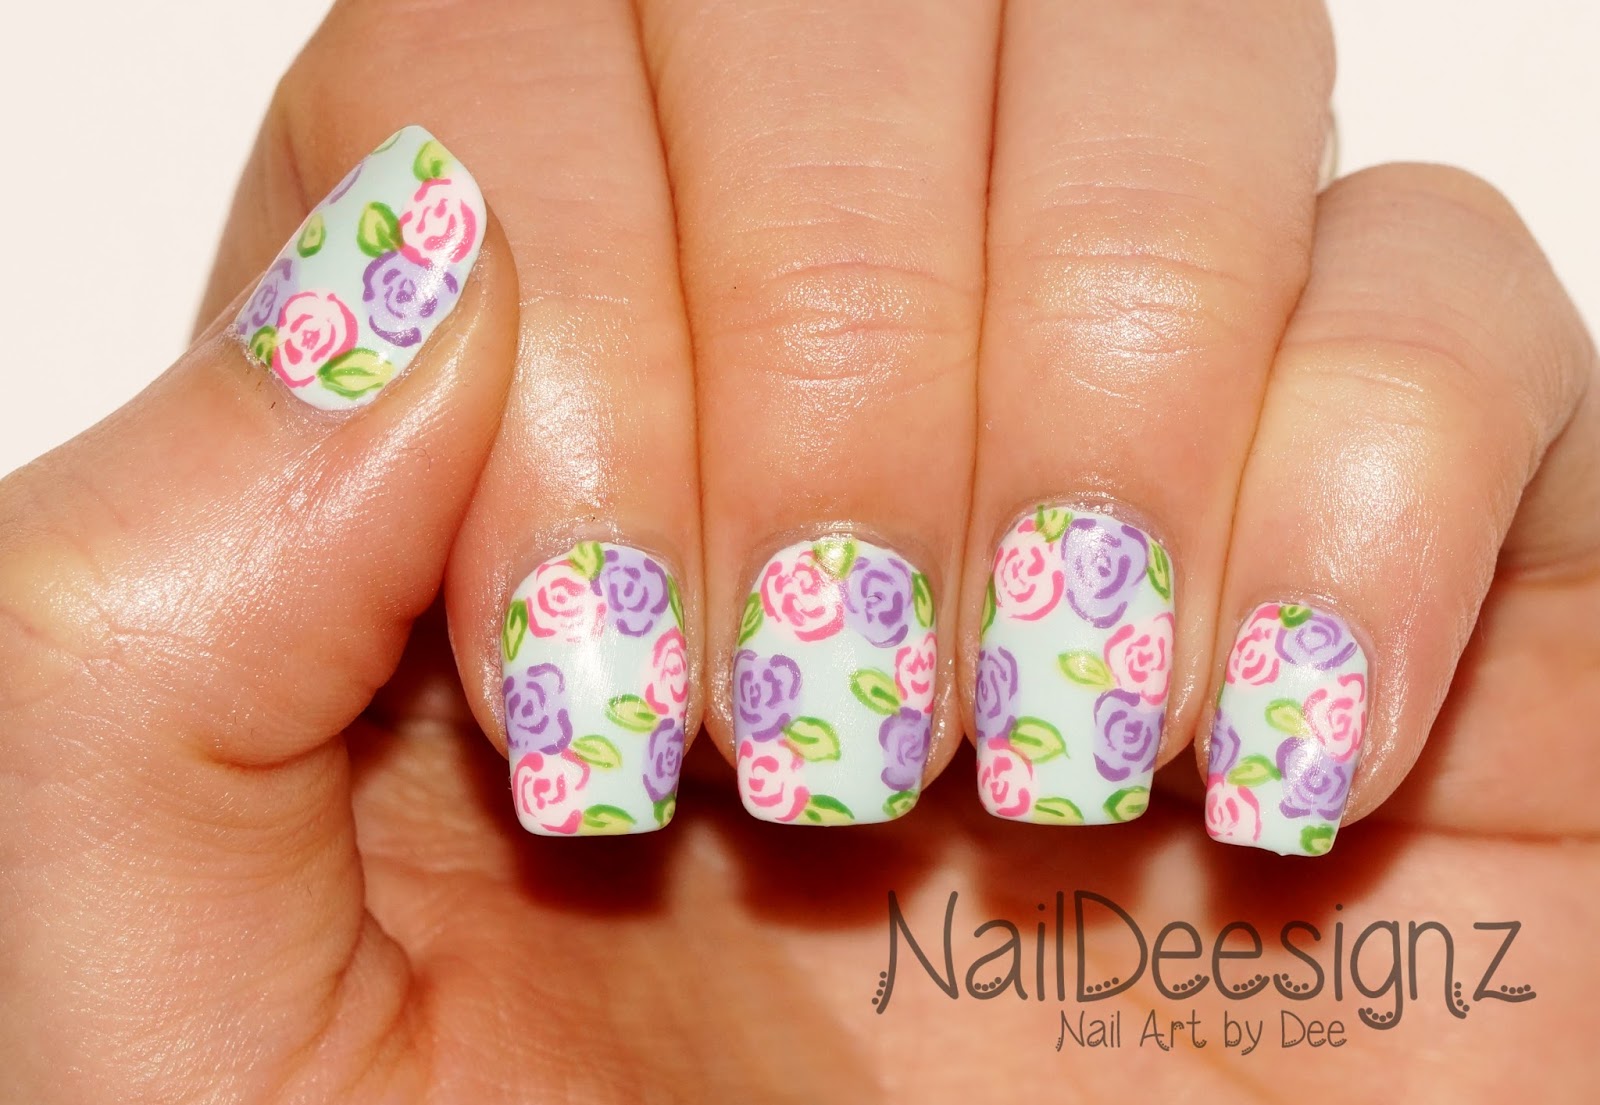 4. Floral Nail Art Designs - wide 4